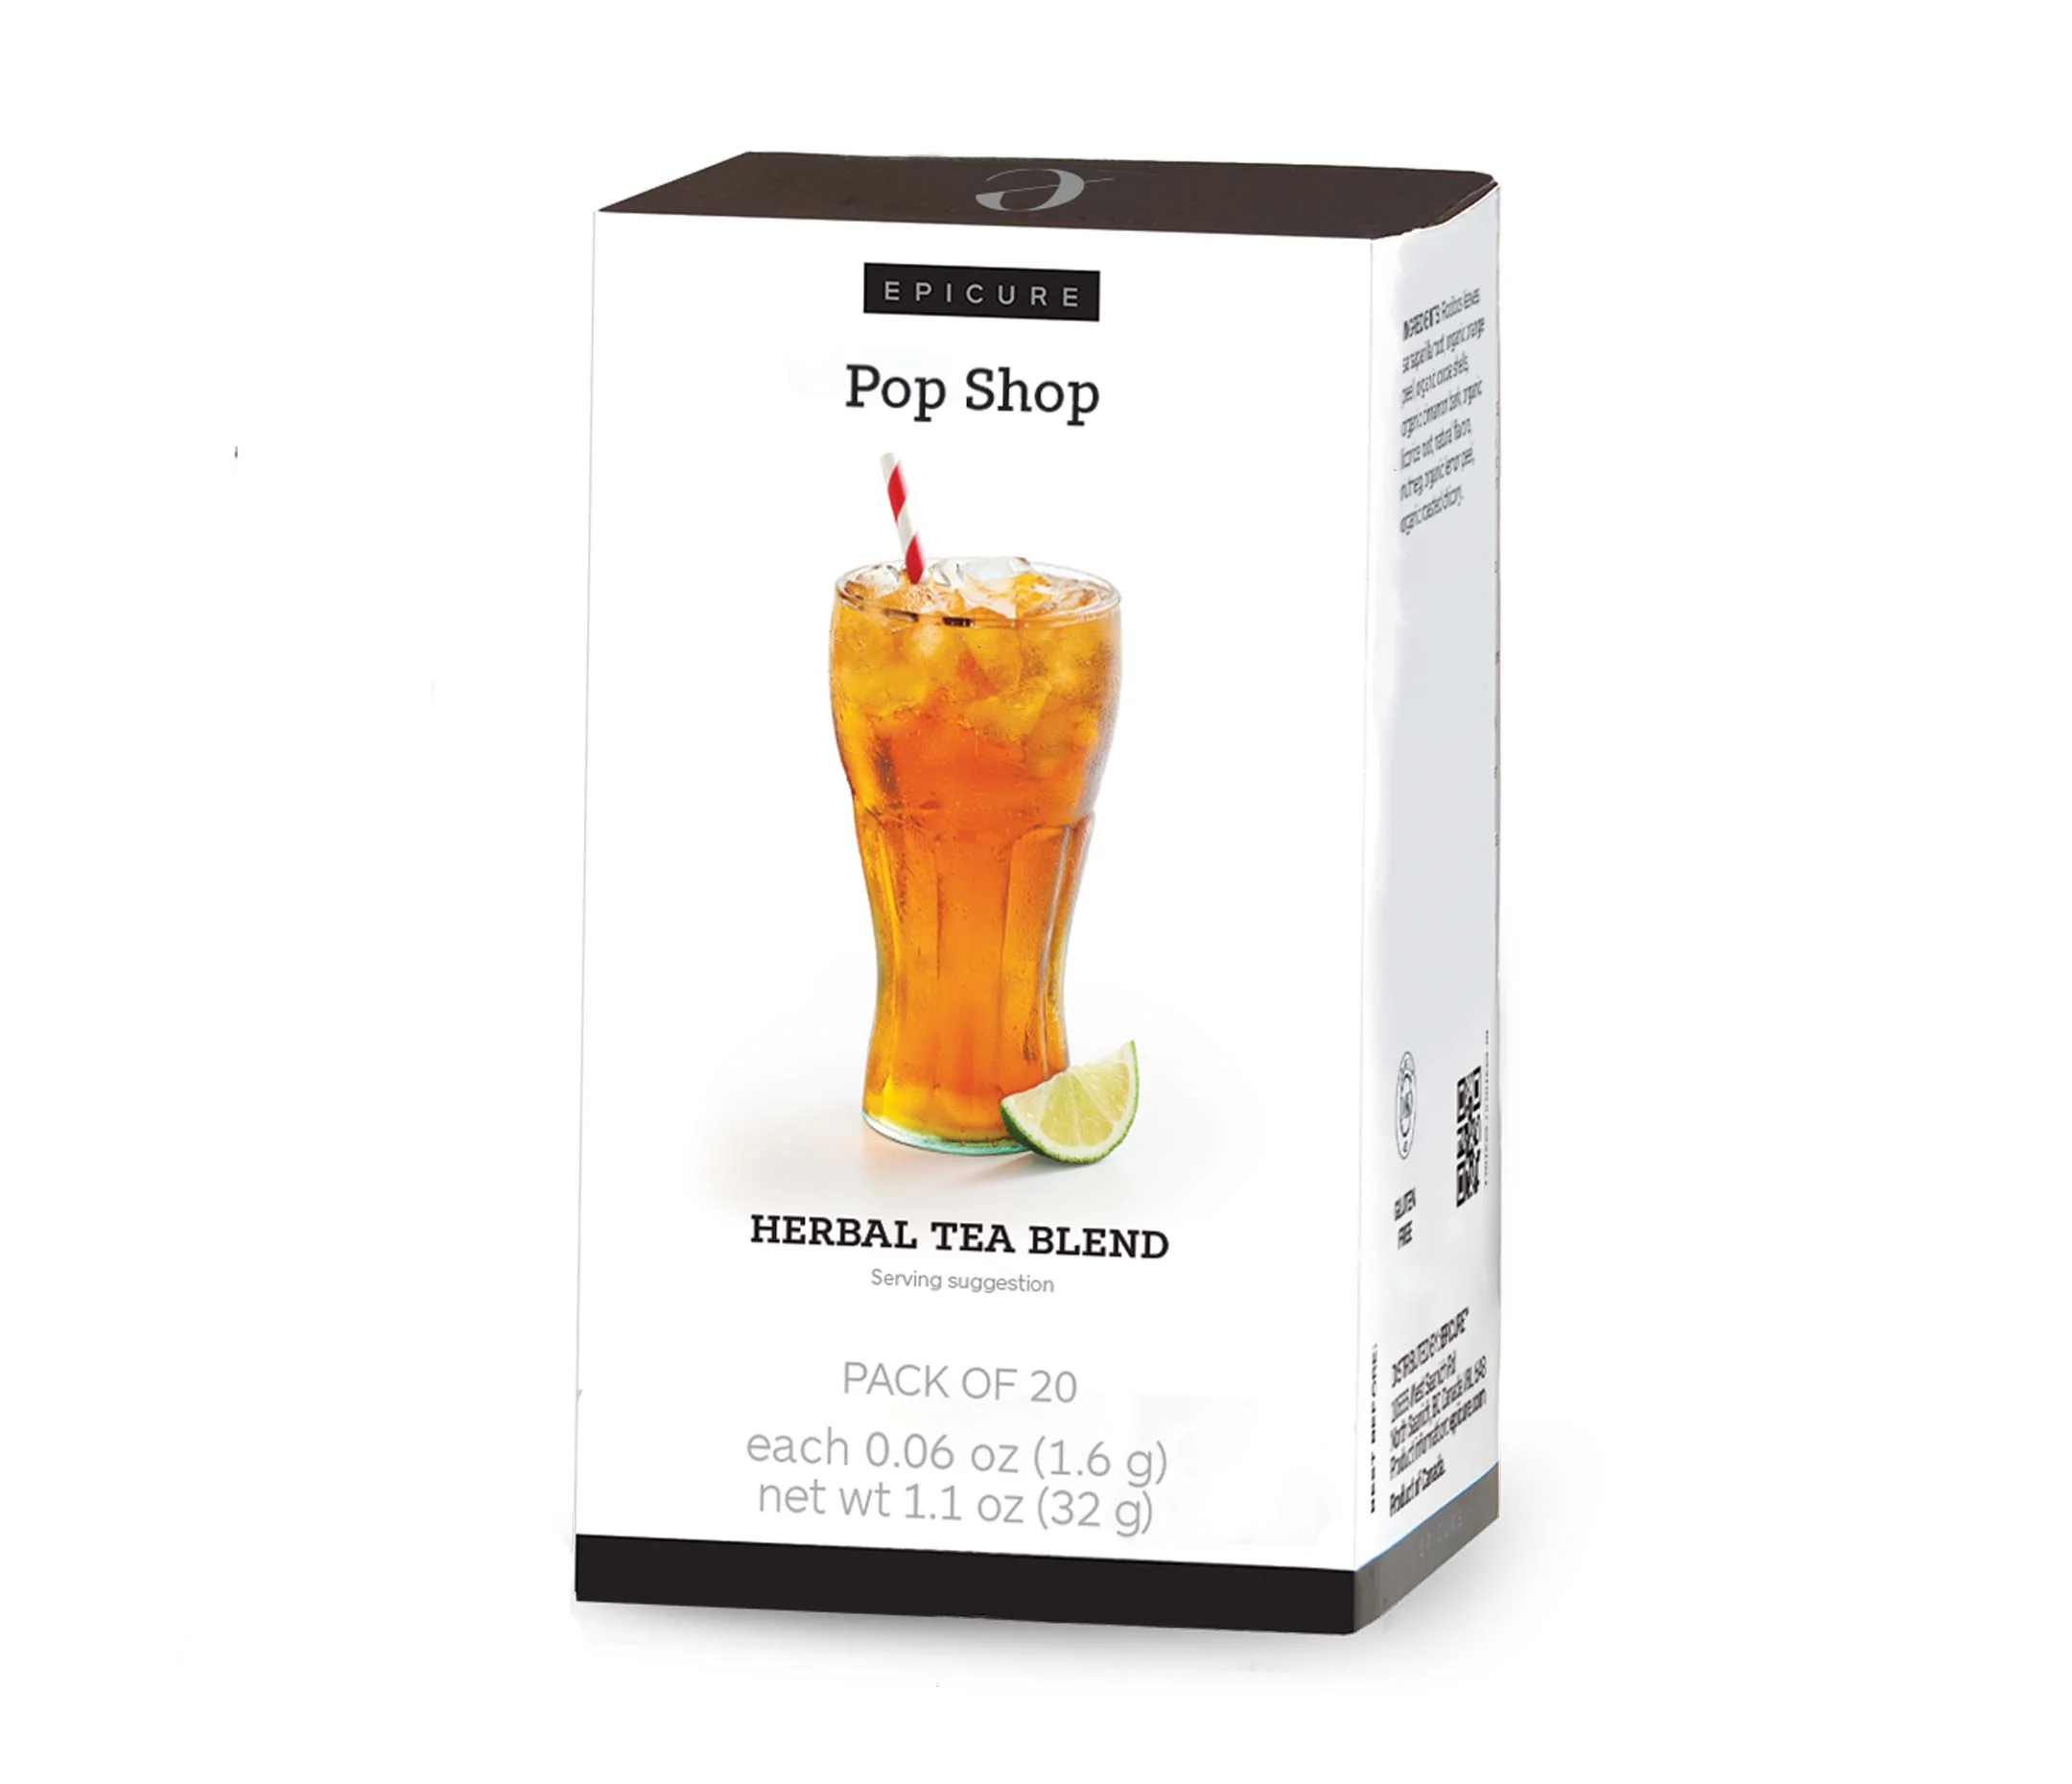 Pop Shop Herbal Tea Blend